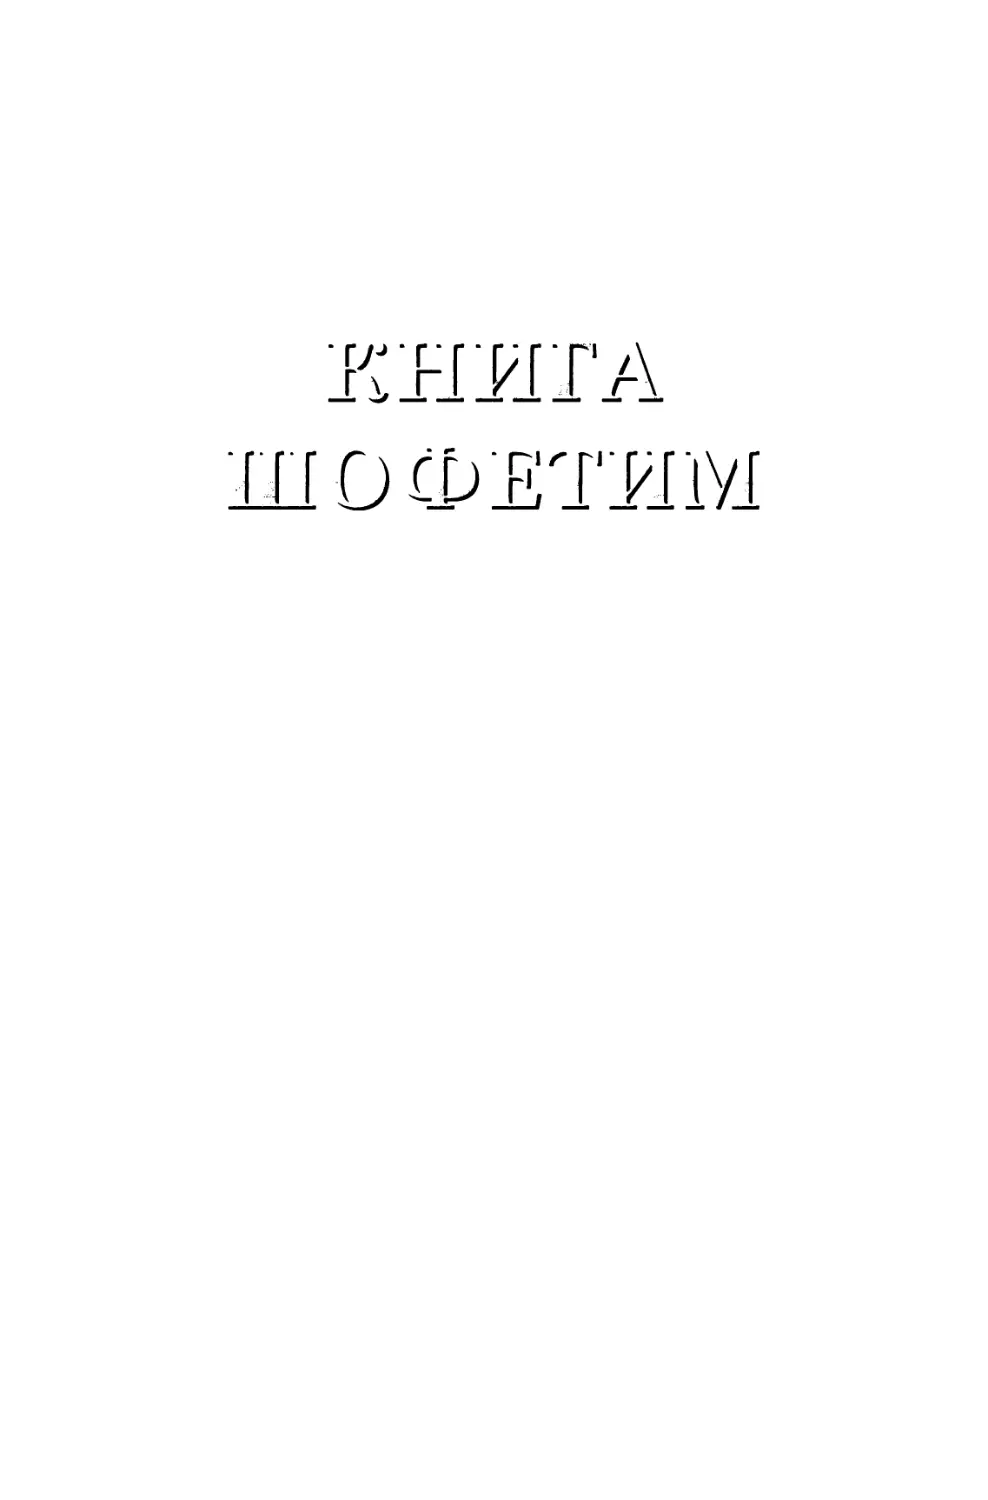 Книга Шофетим